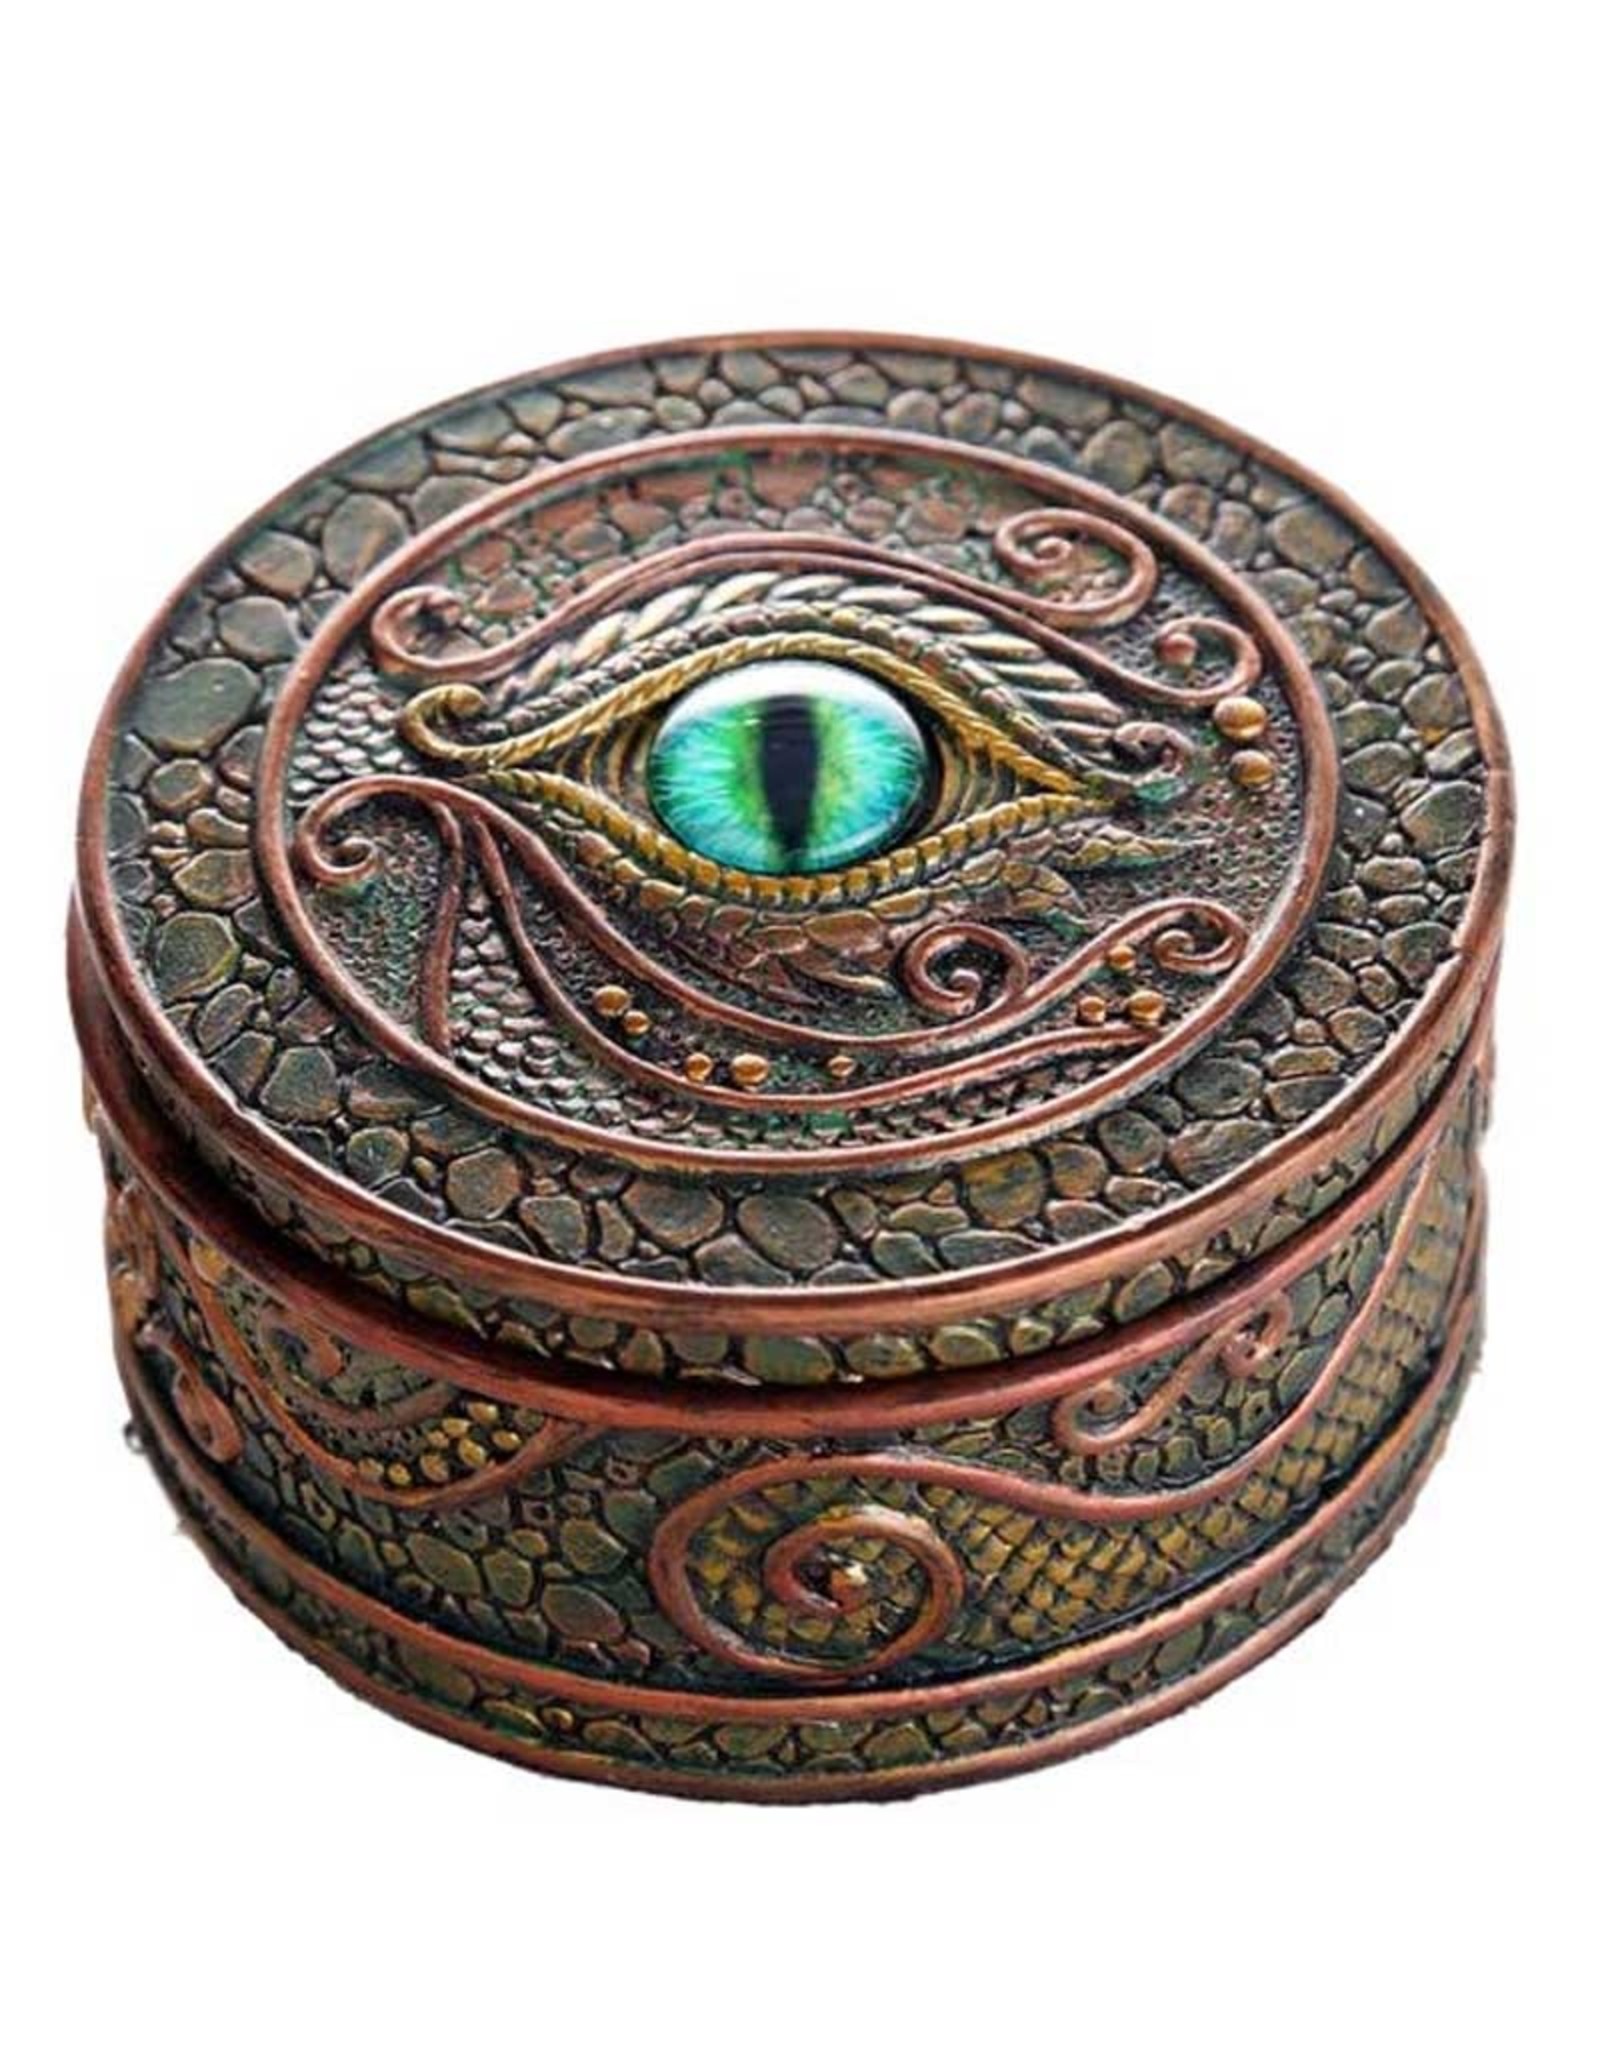 Pacific Trading Round Dragon Eye Box